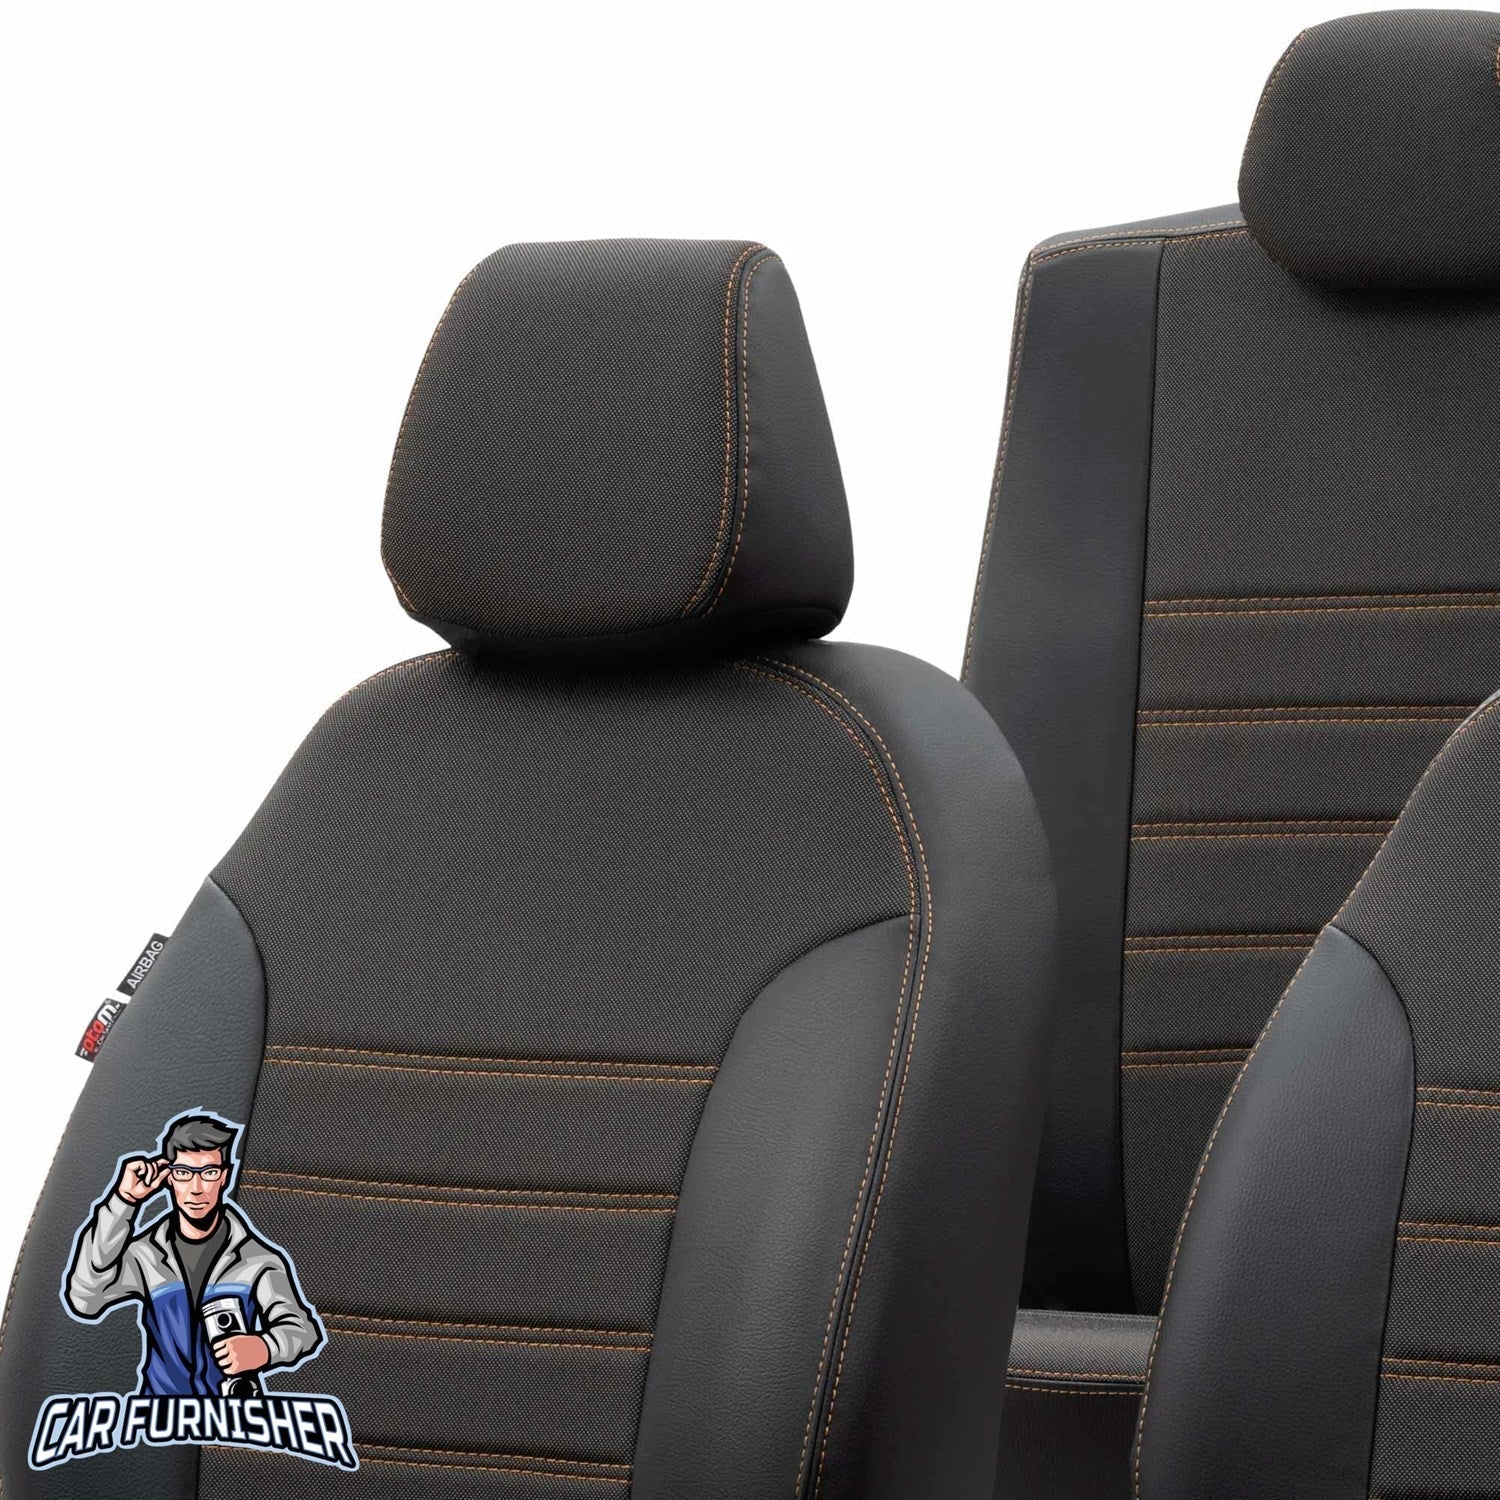 Bmw 1 Series Car Seat Cover 2004-2019 E87/F20 Custom Paris Design Dark Beige Full Set (5 Seats + Handrest) Leather & Fabric